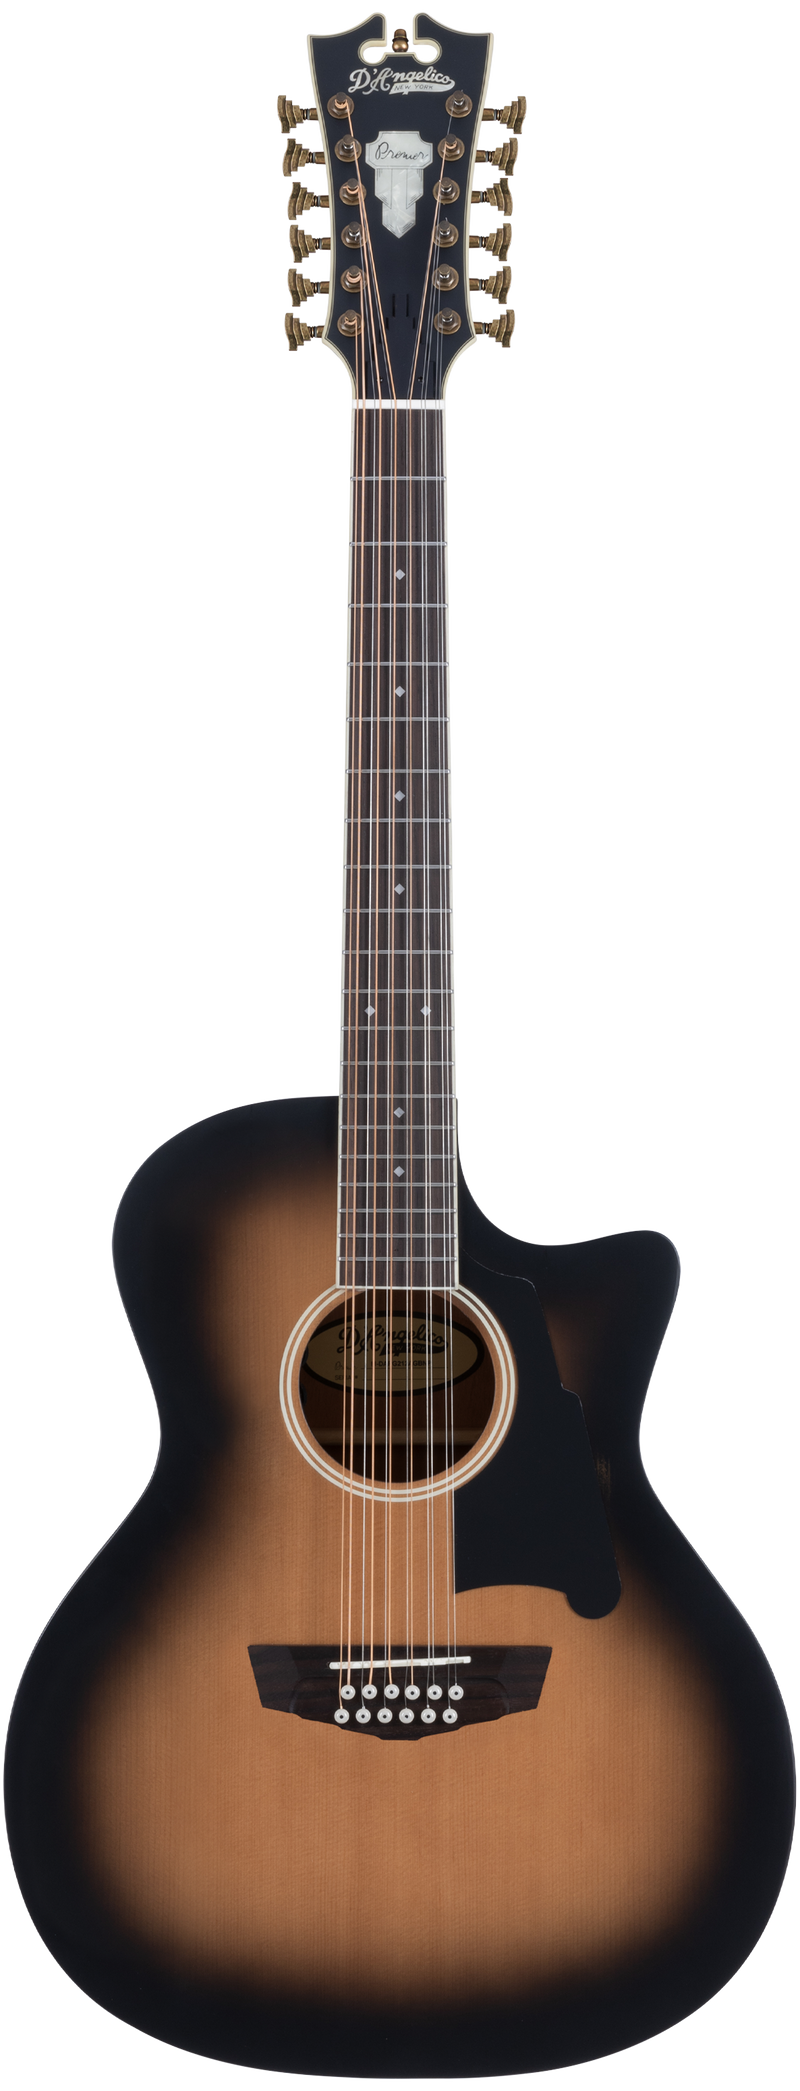 D'Angelico FULTON GRAND AUDITORIUM 12-String Acoustic Guitar (Aged Burst)